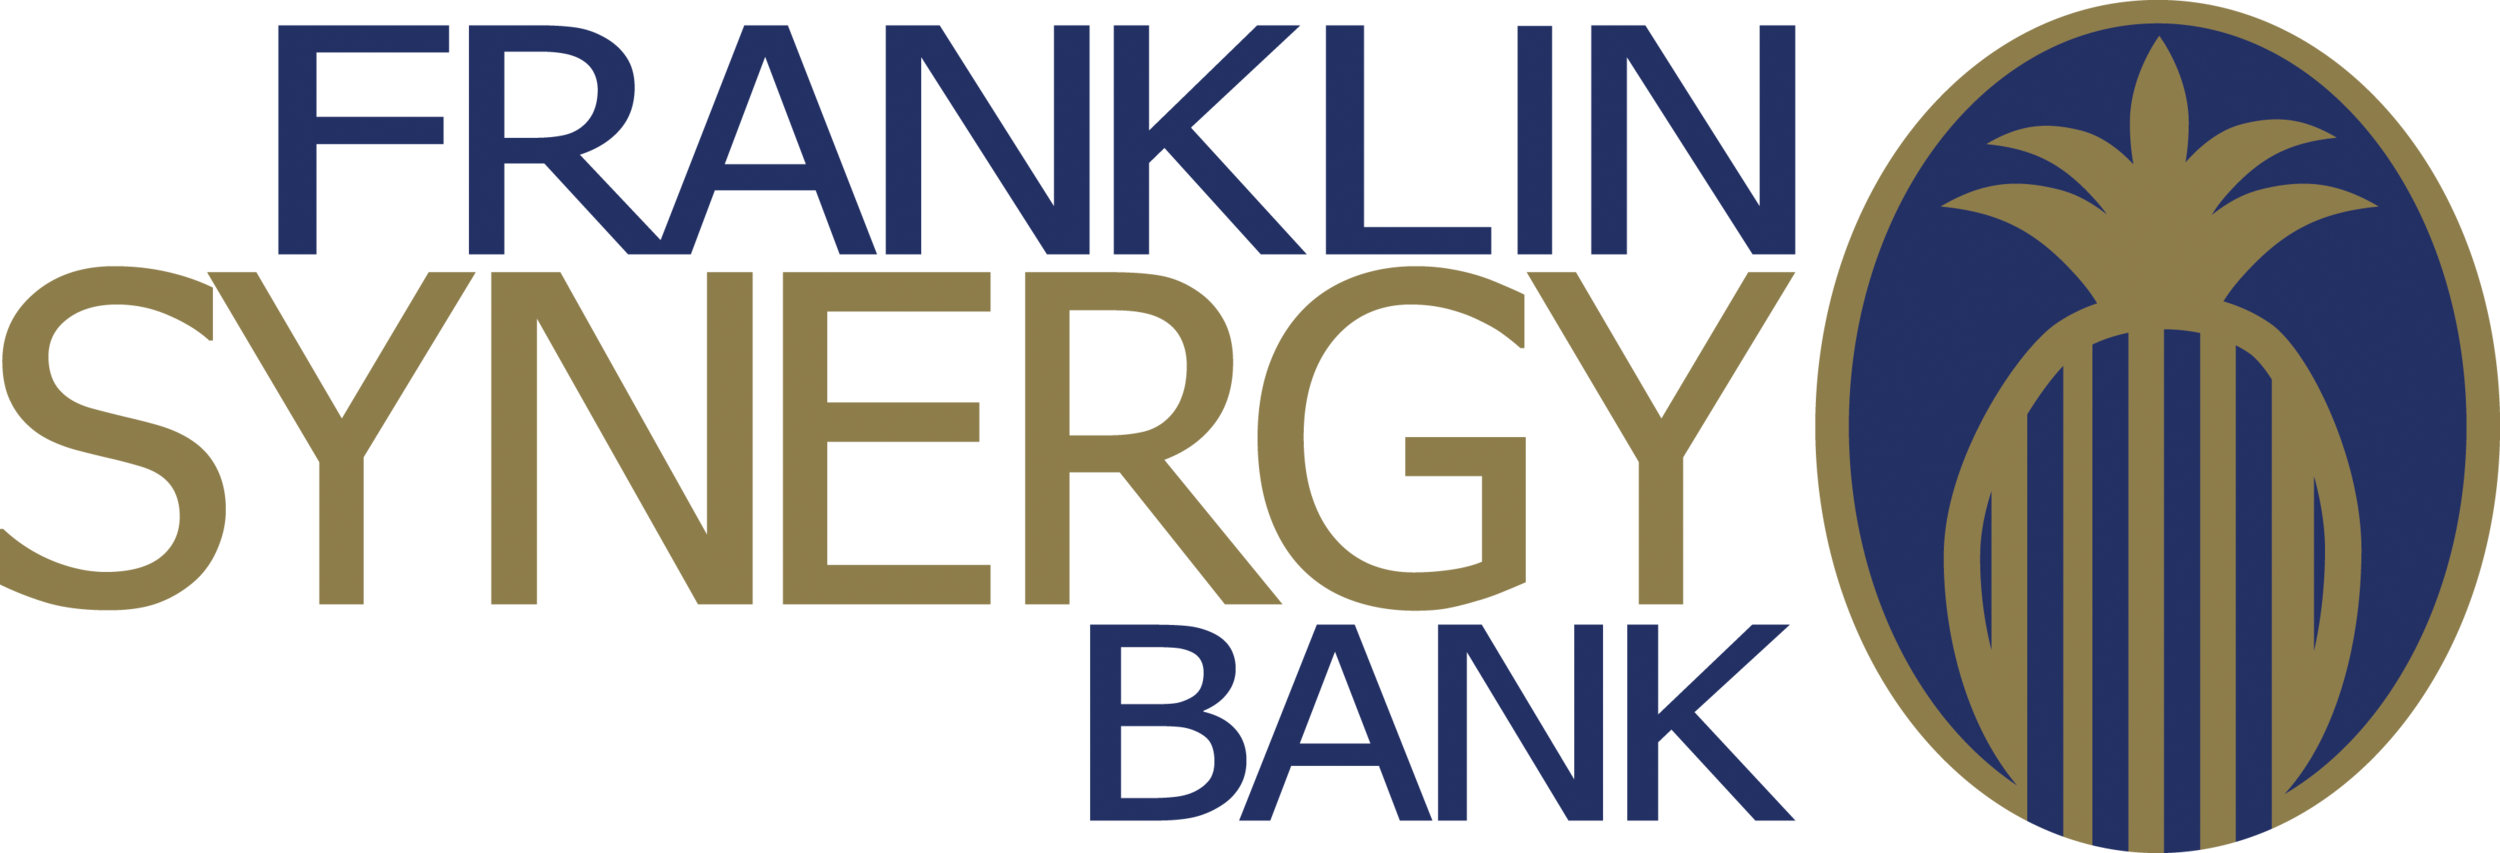 Franklin Synergy Bank Master Logo.png